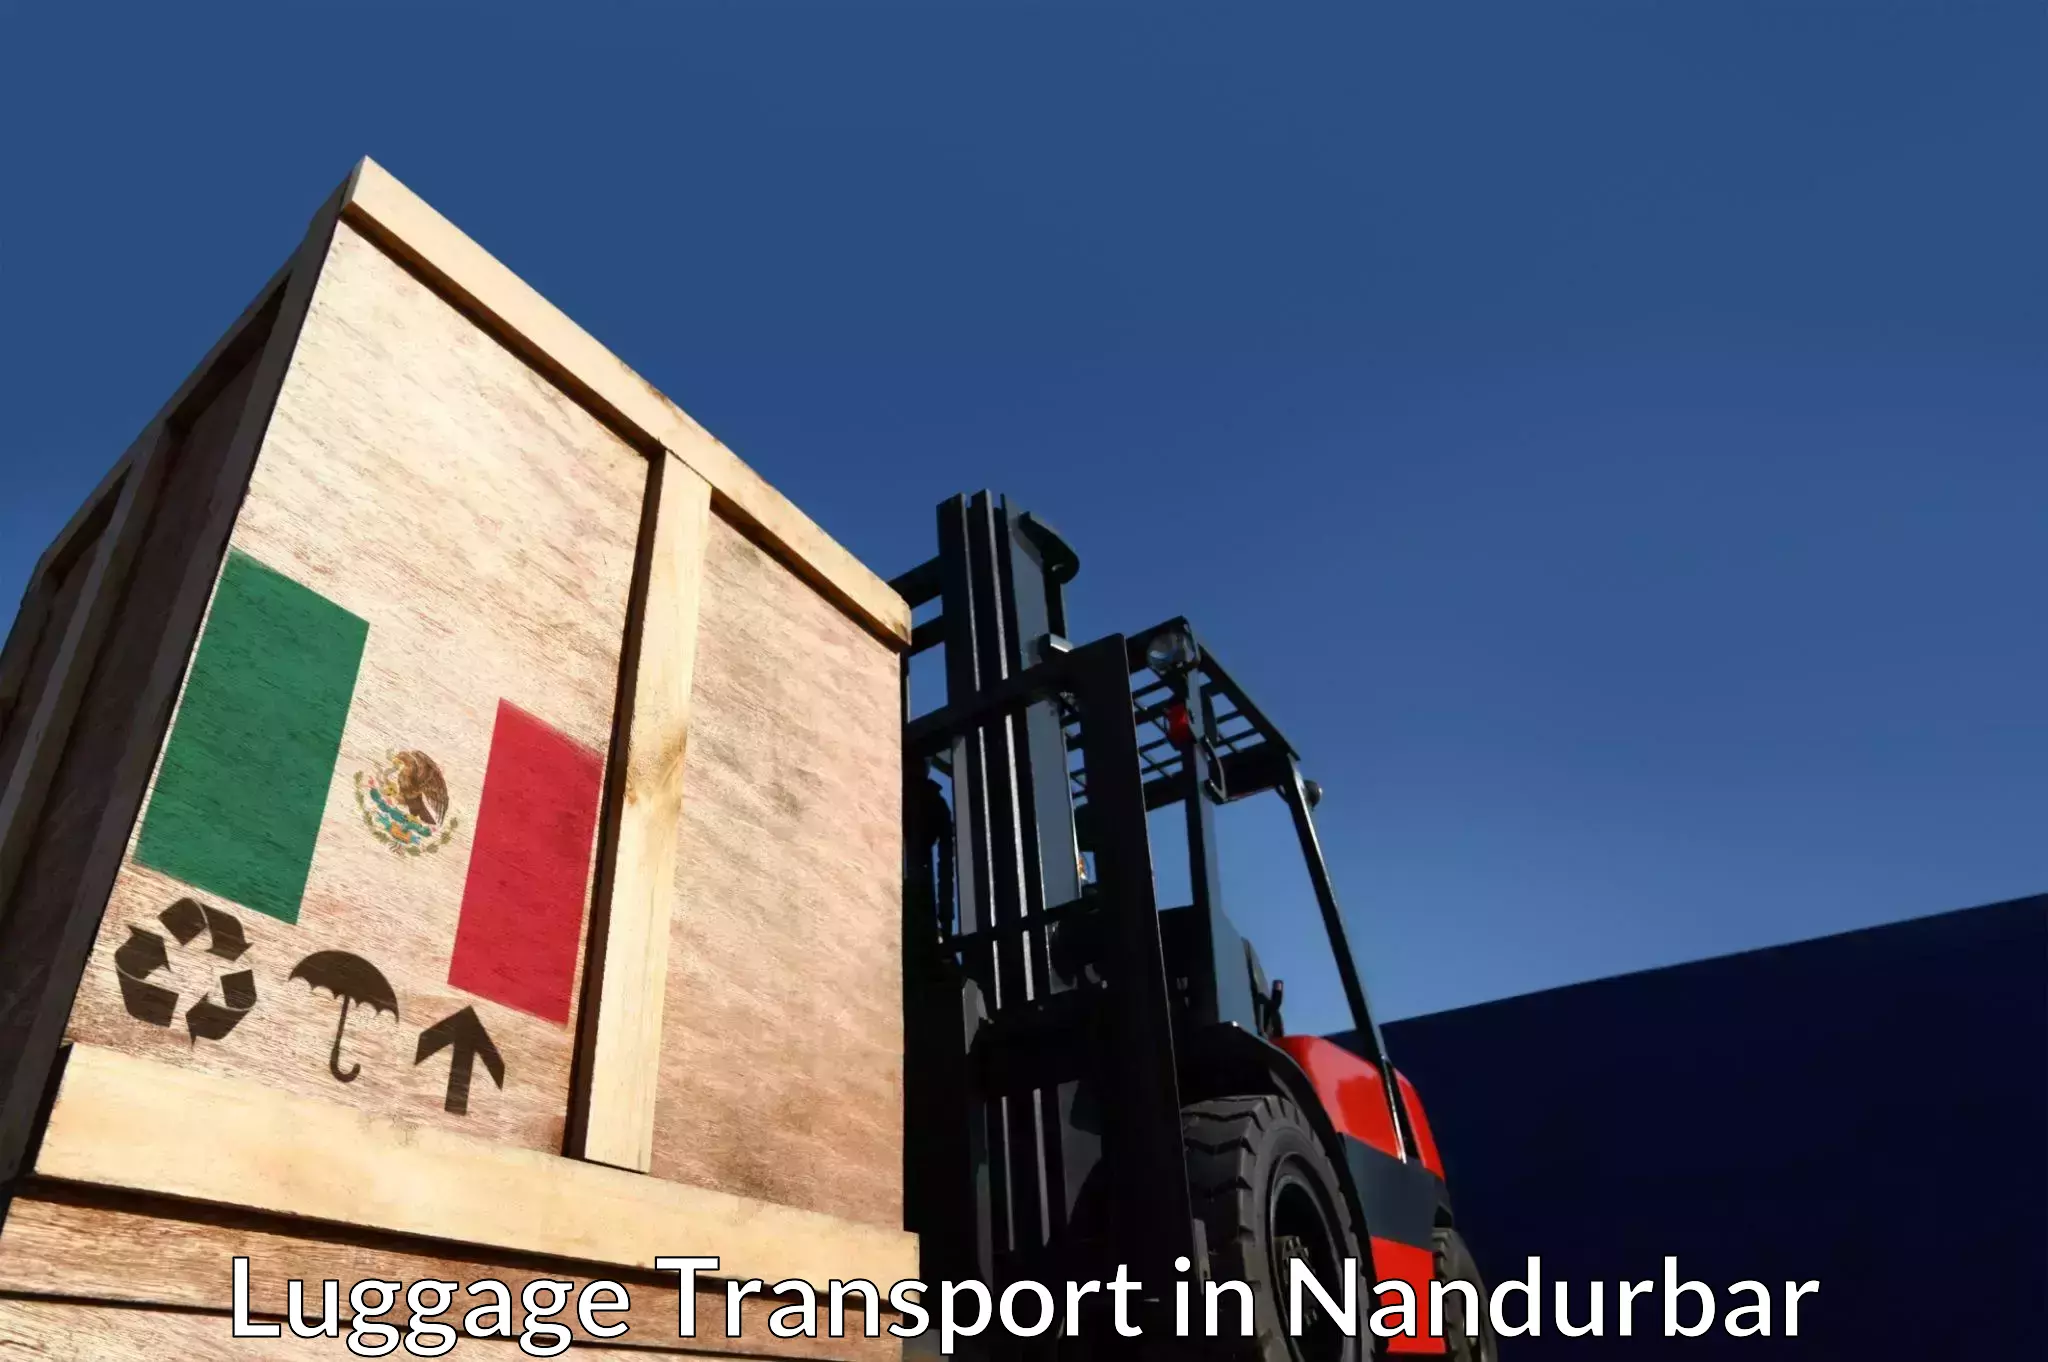 Multi-destination luggage transport in Nandurbar